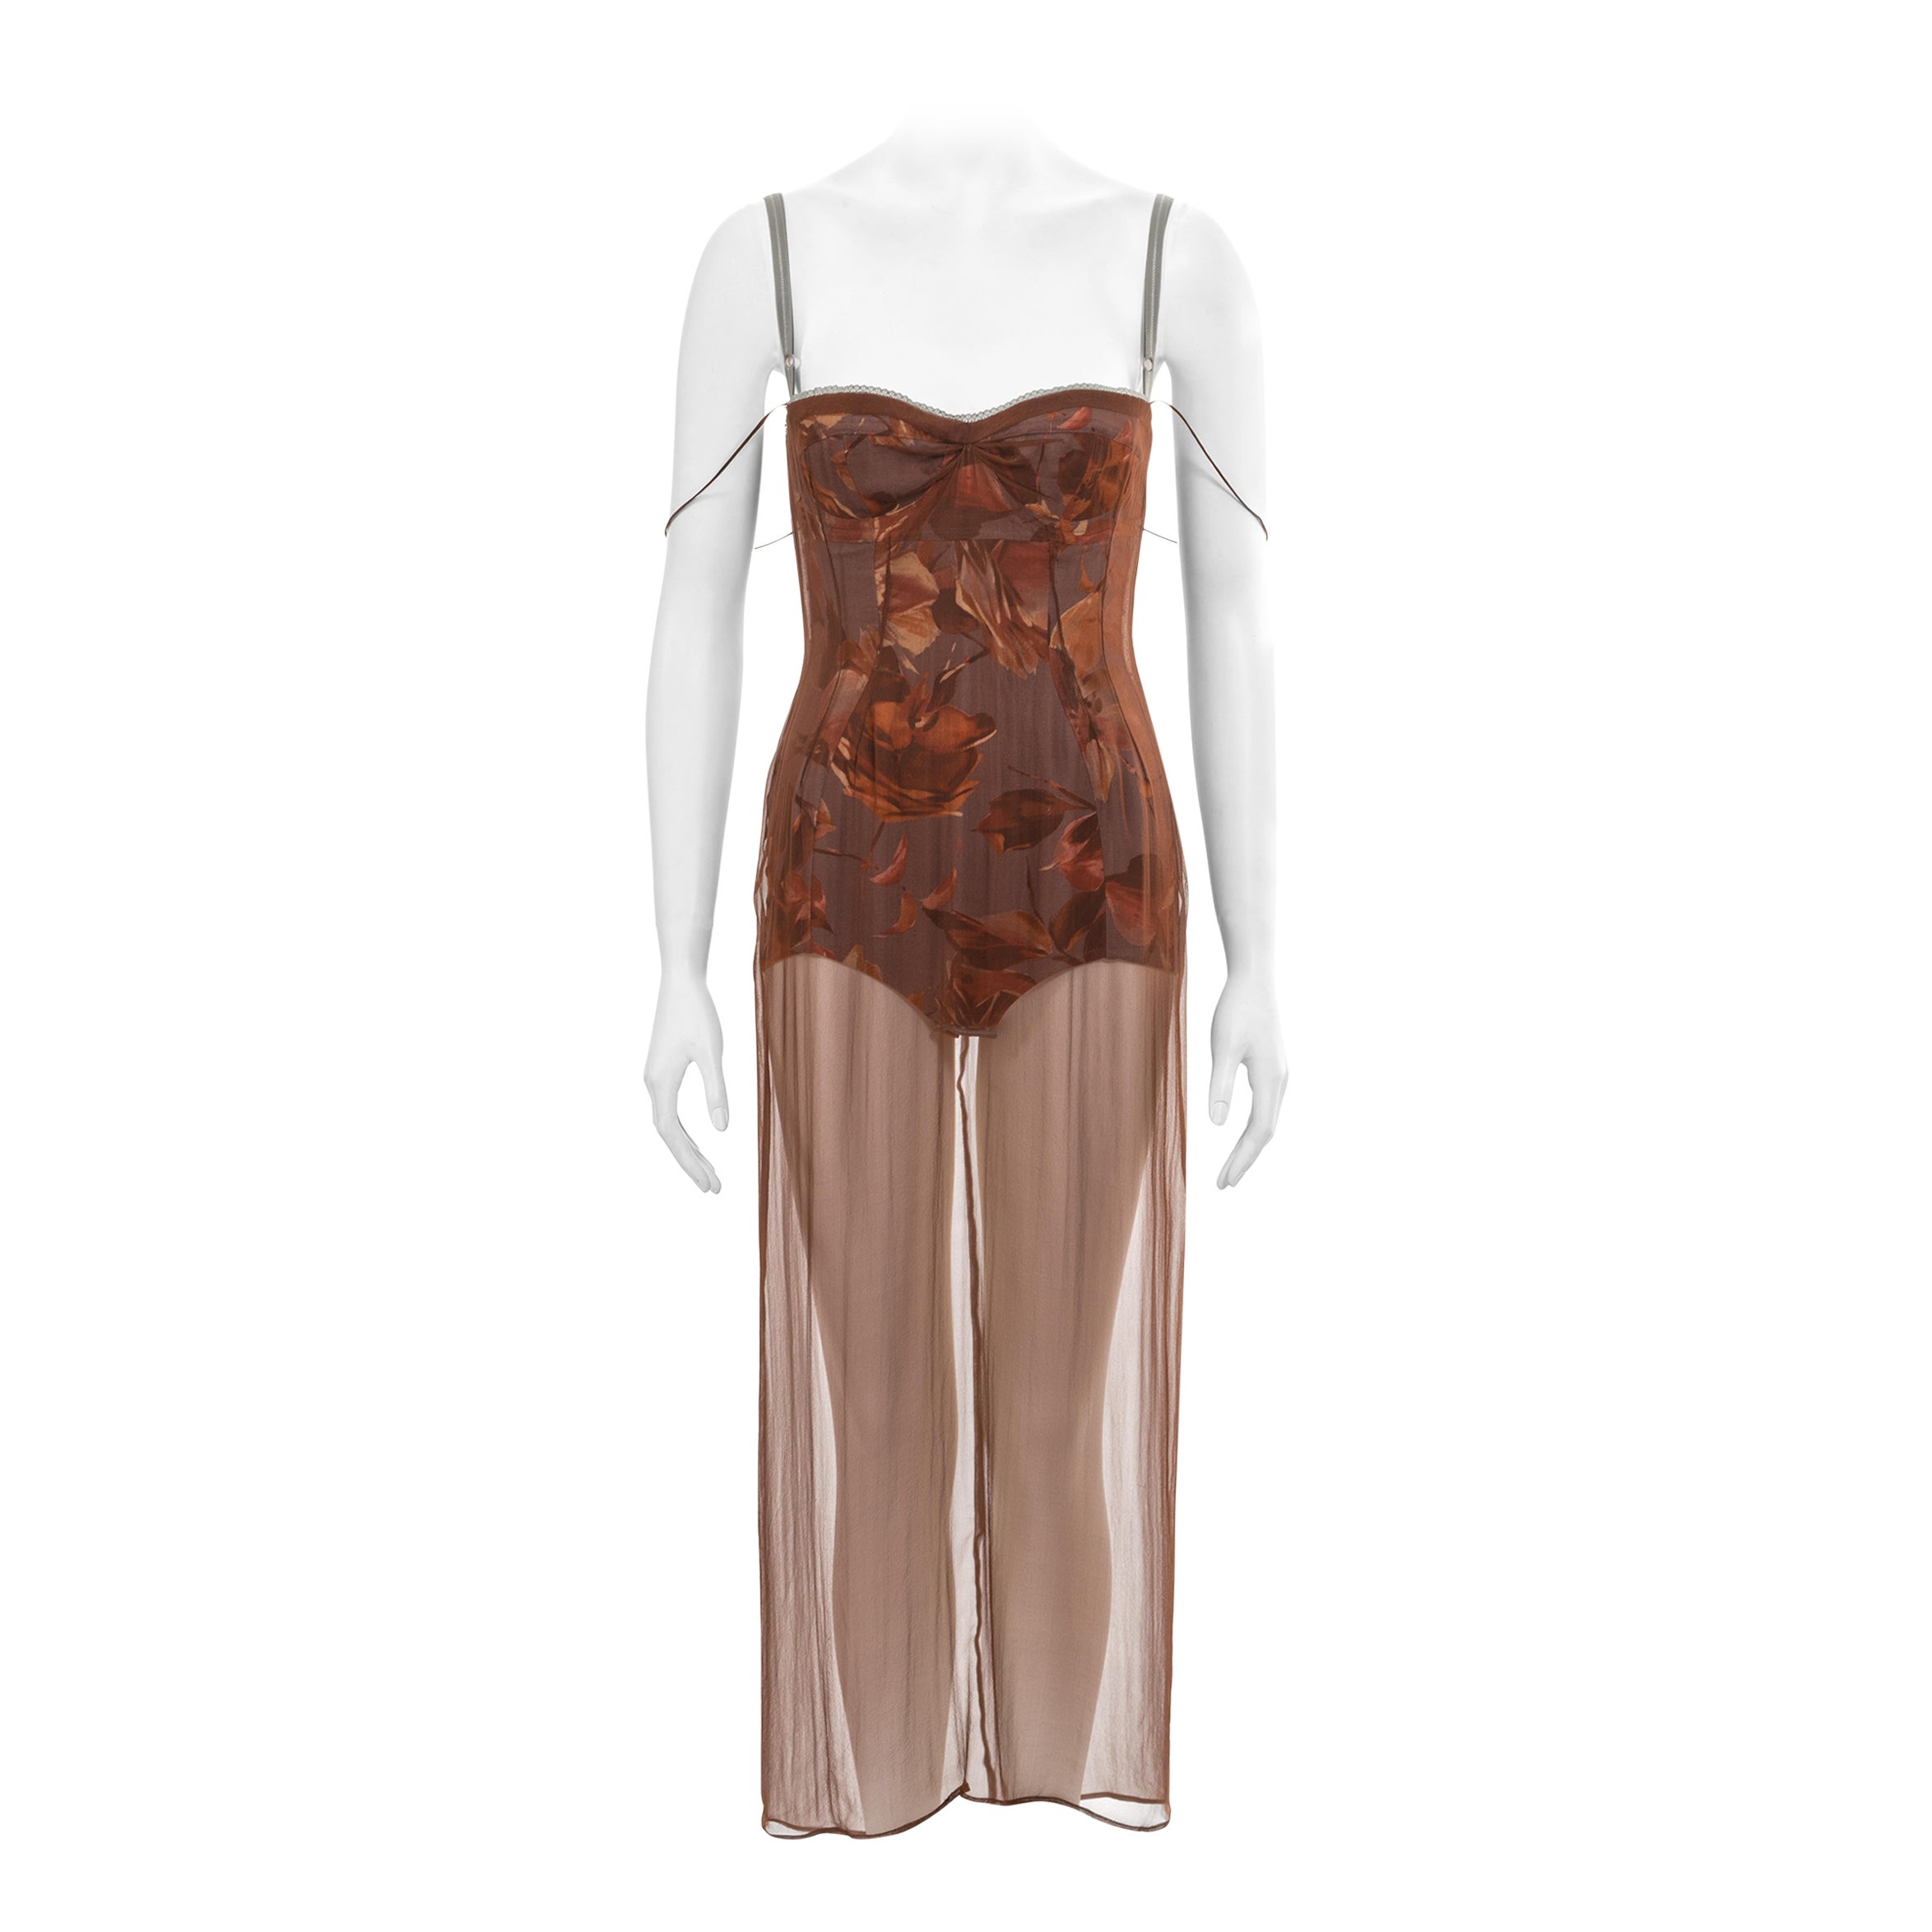 Dolce & Gabbana brown silk chiffon evening dress with built-in bodysuit, ss 1997